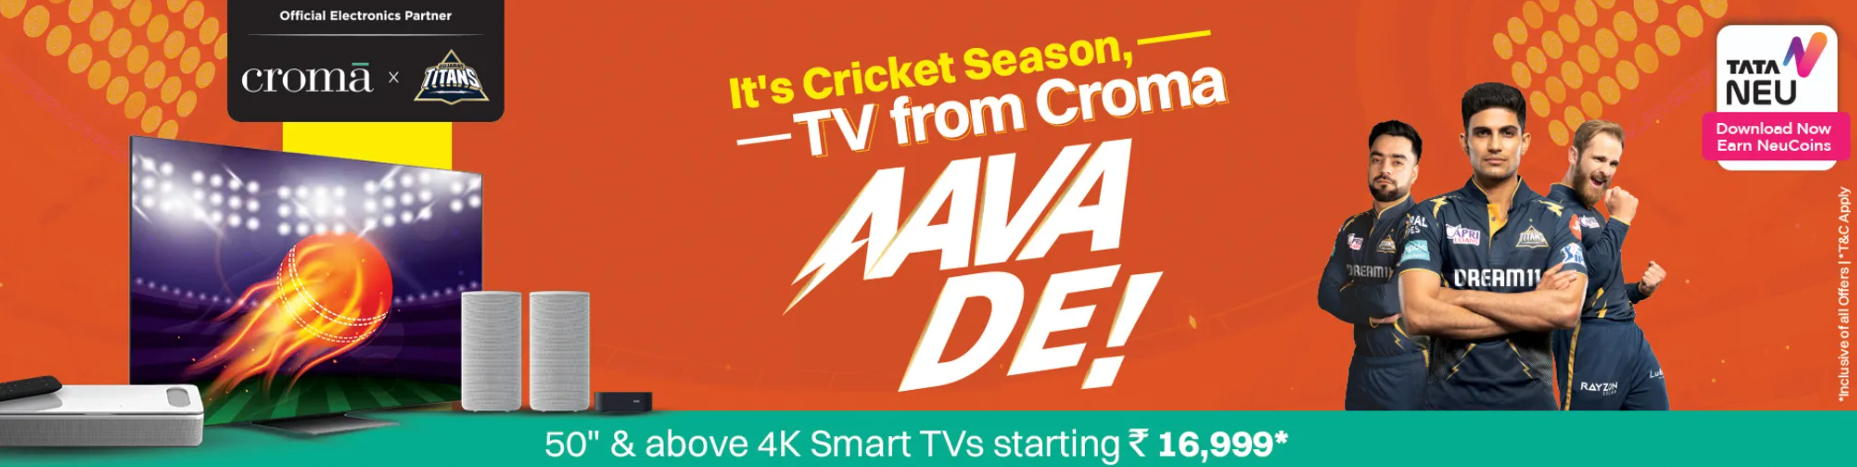 Croma TV Offers